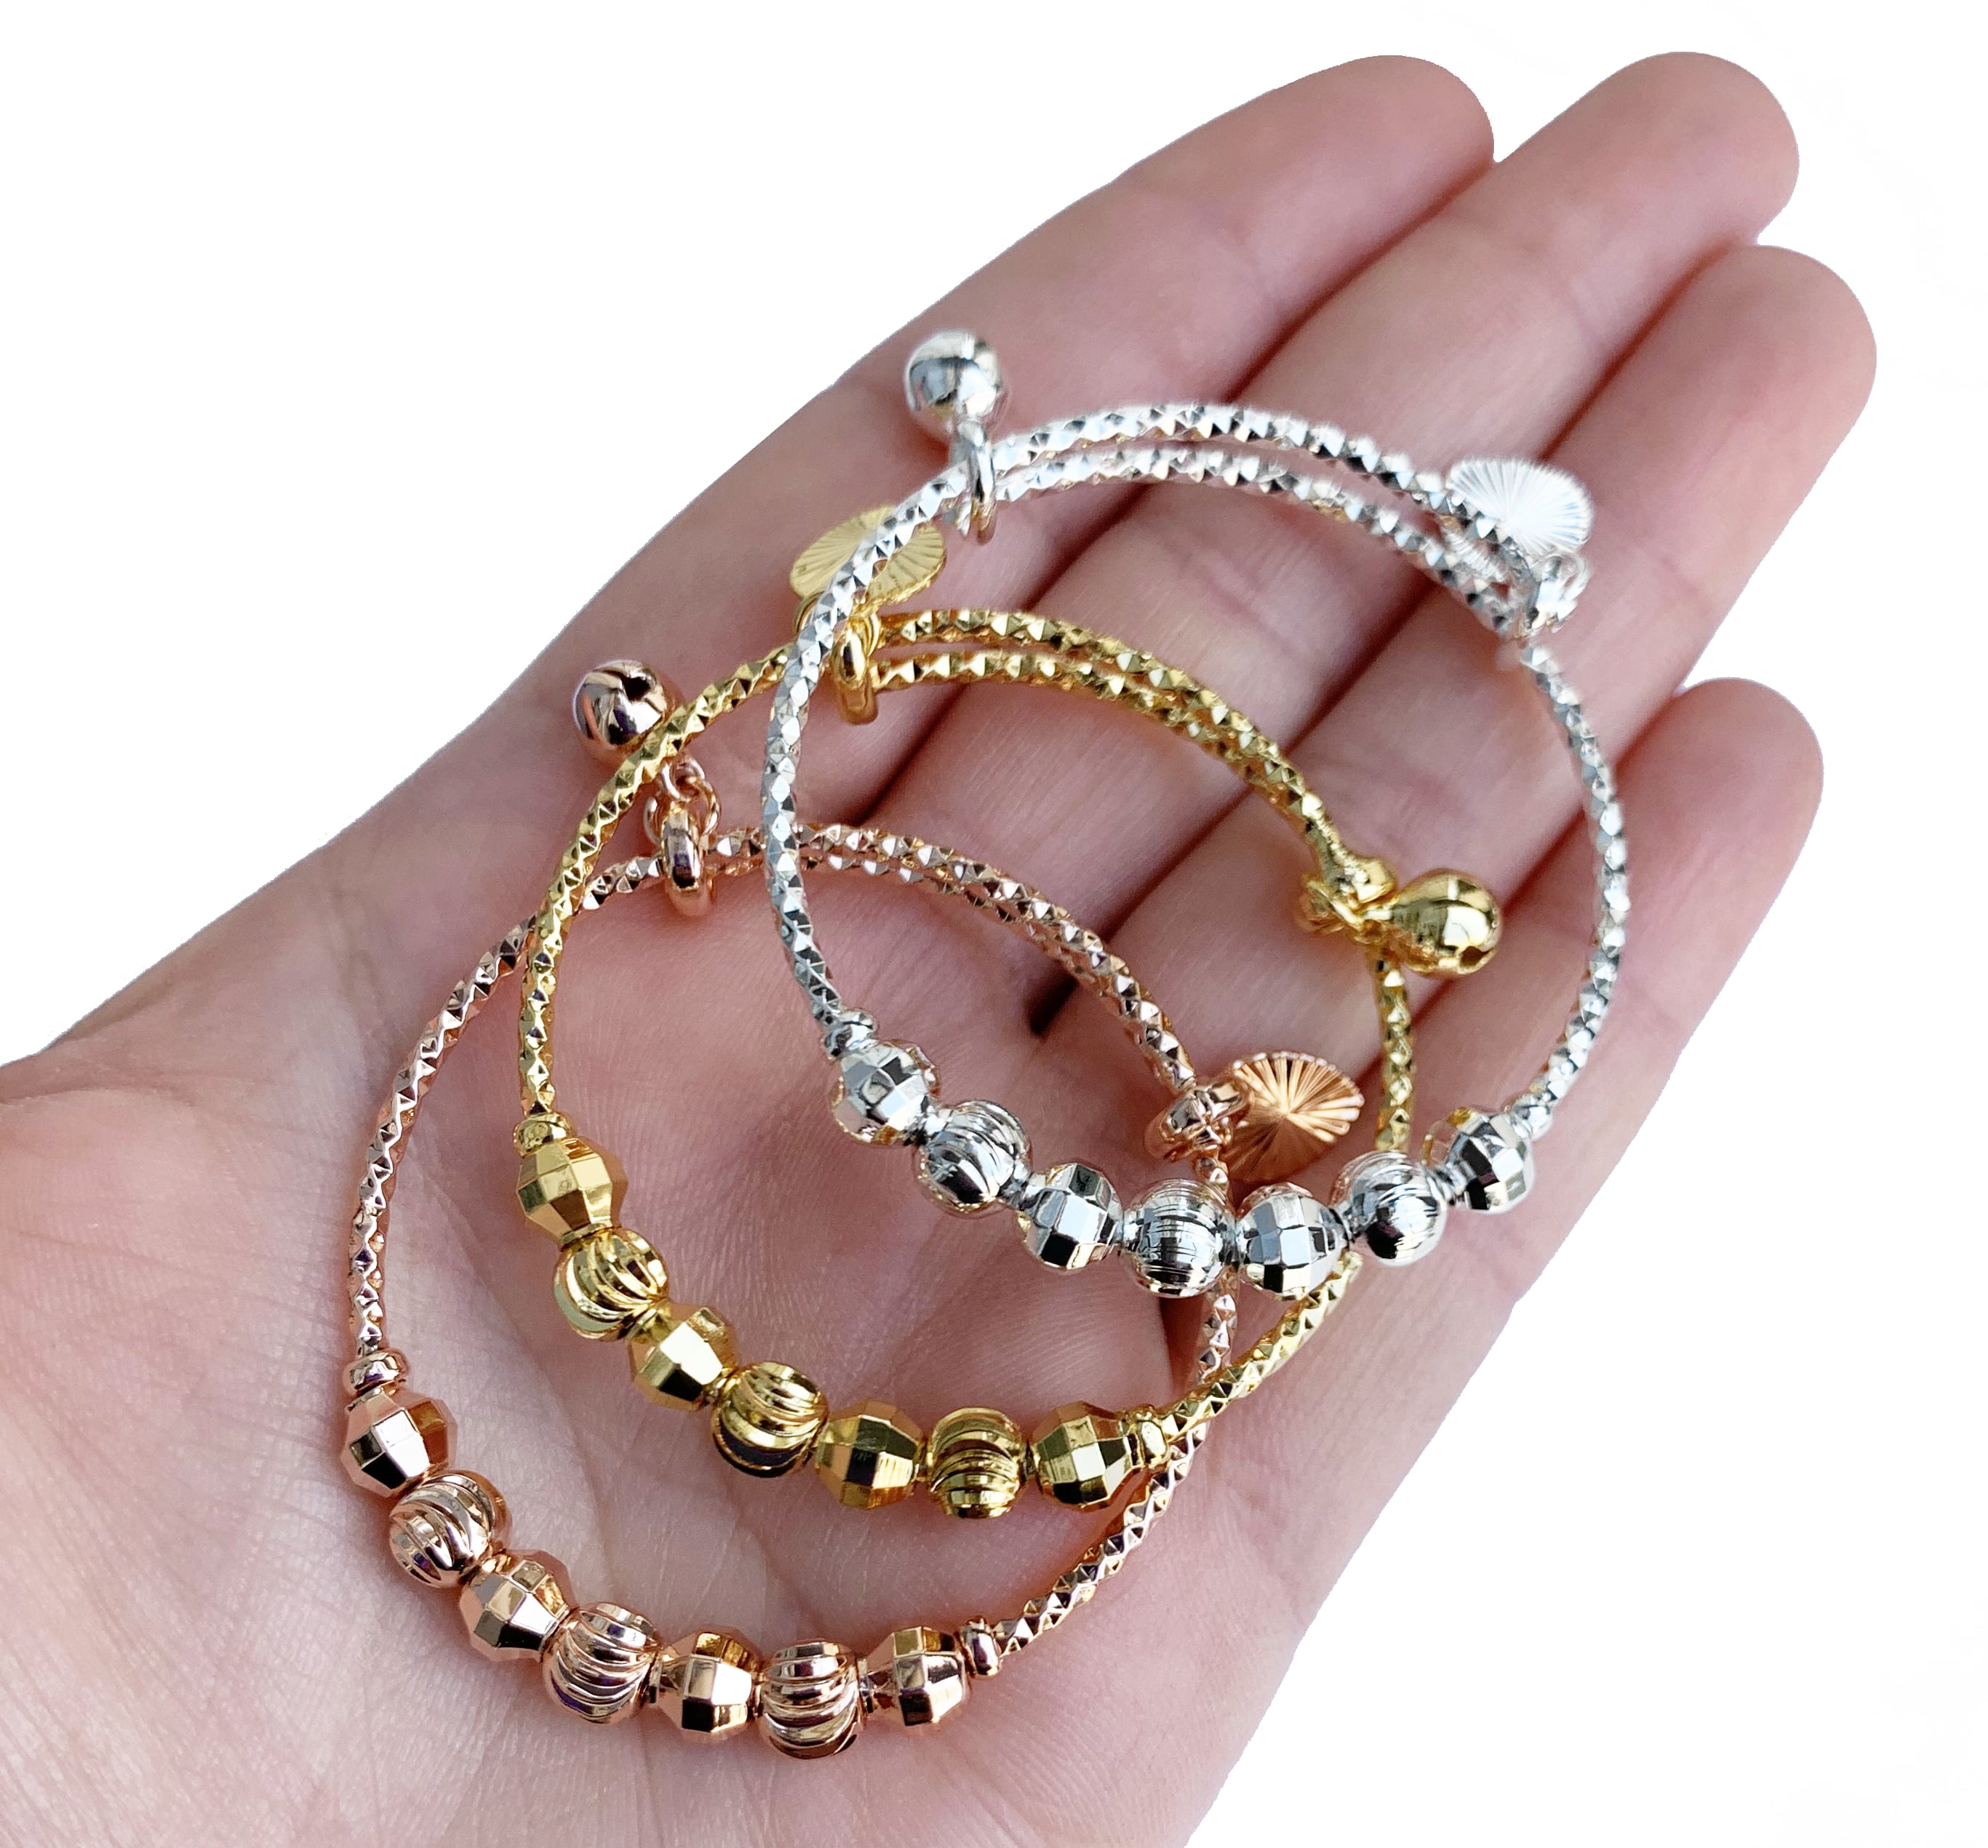 Gold Expandable Bangle Bracelets Adjustable with pink charms for girl babyshower favors